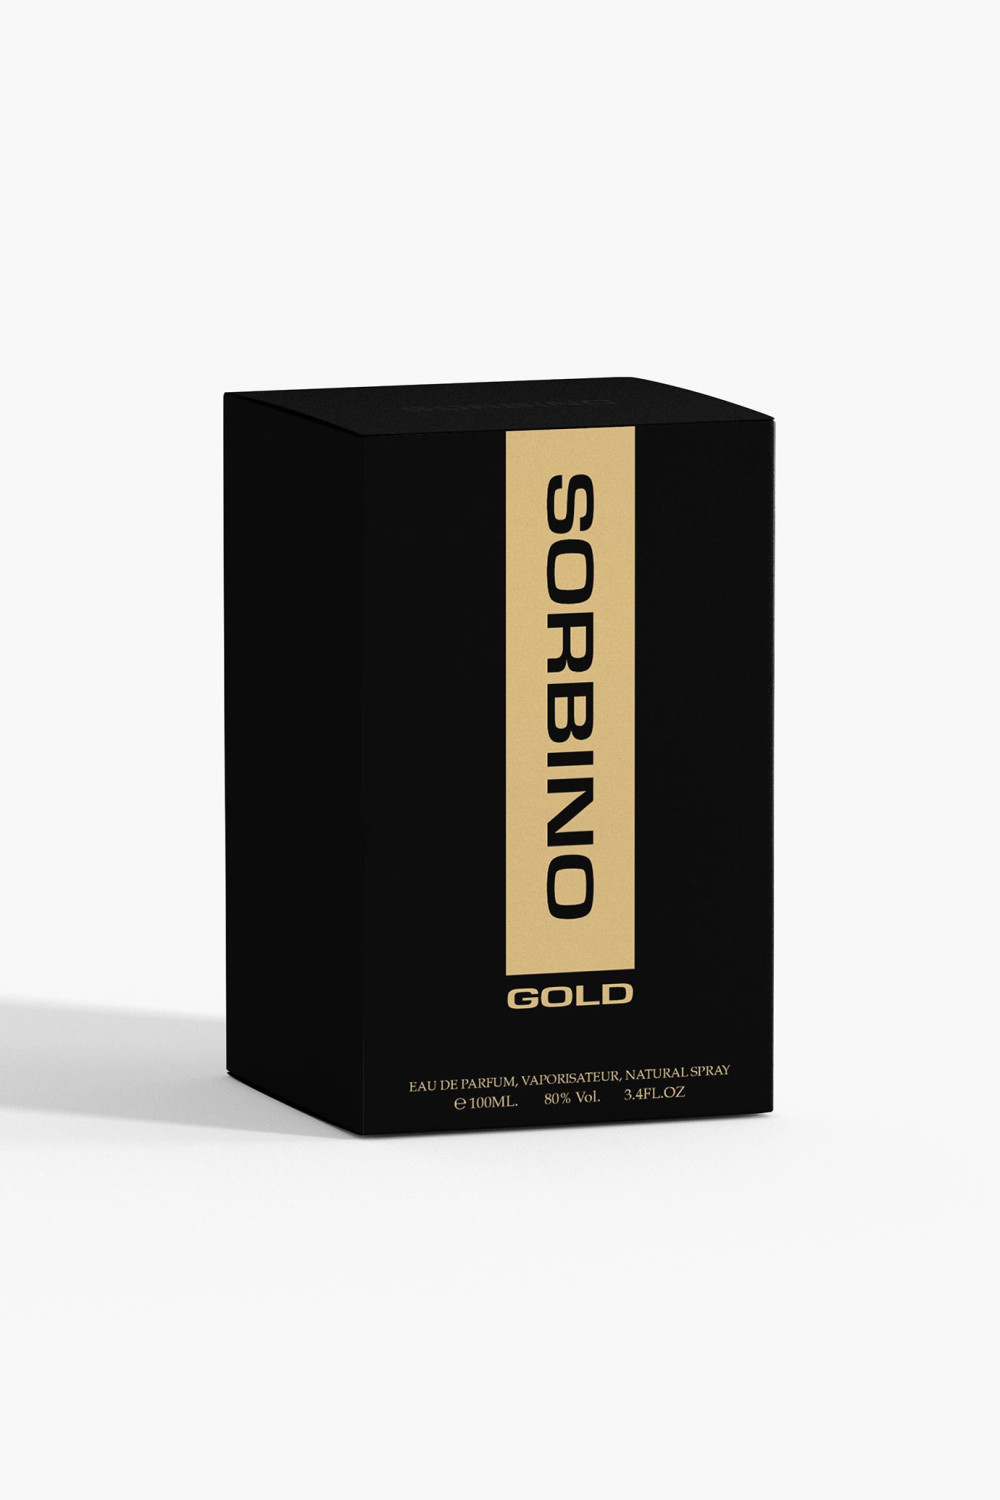 Sorbino Gold